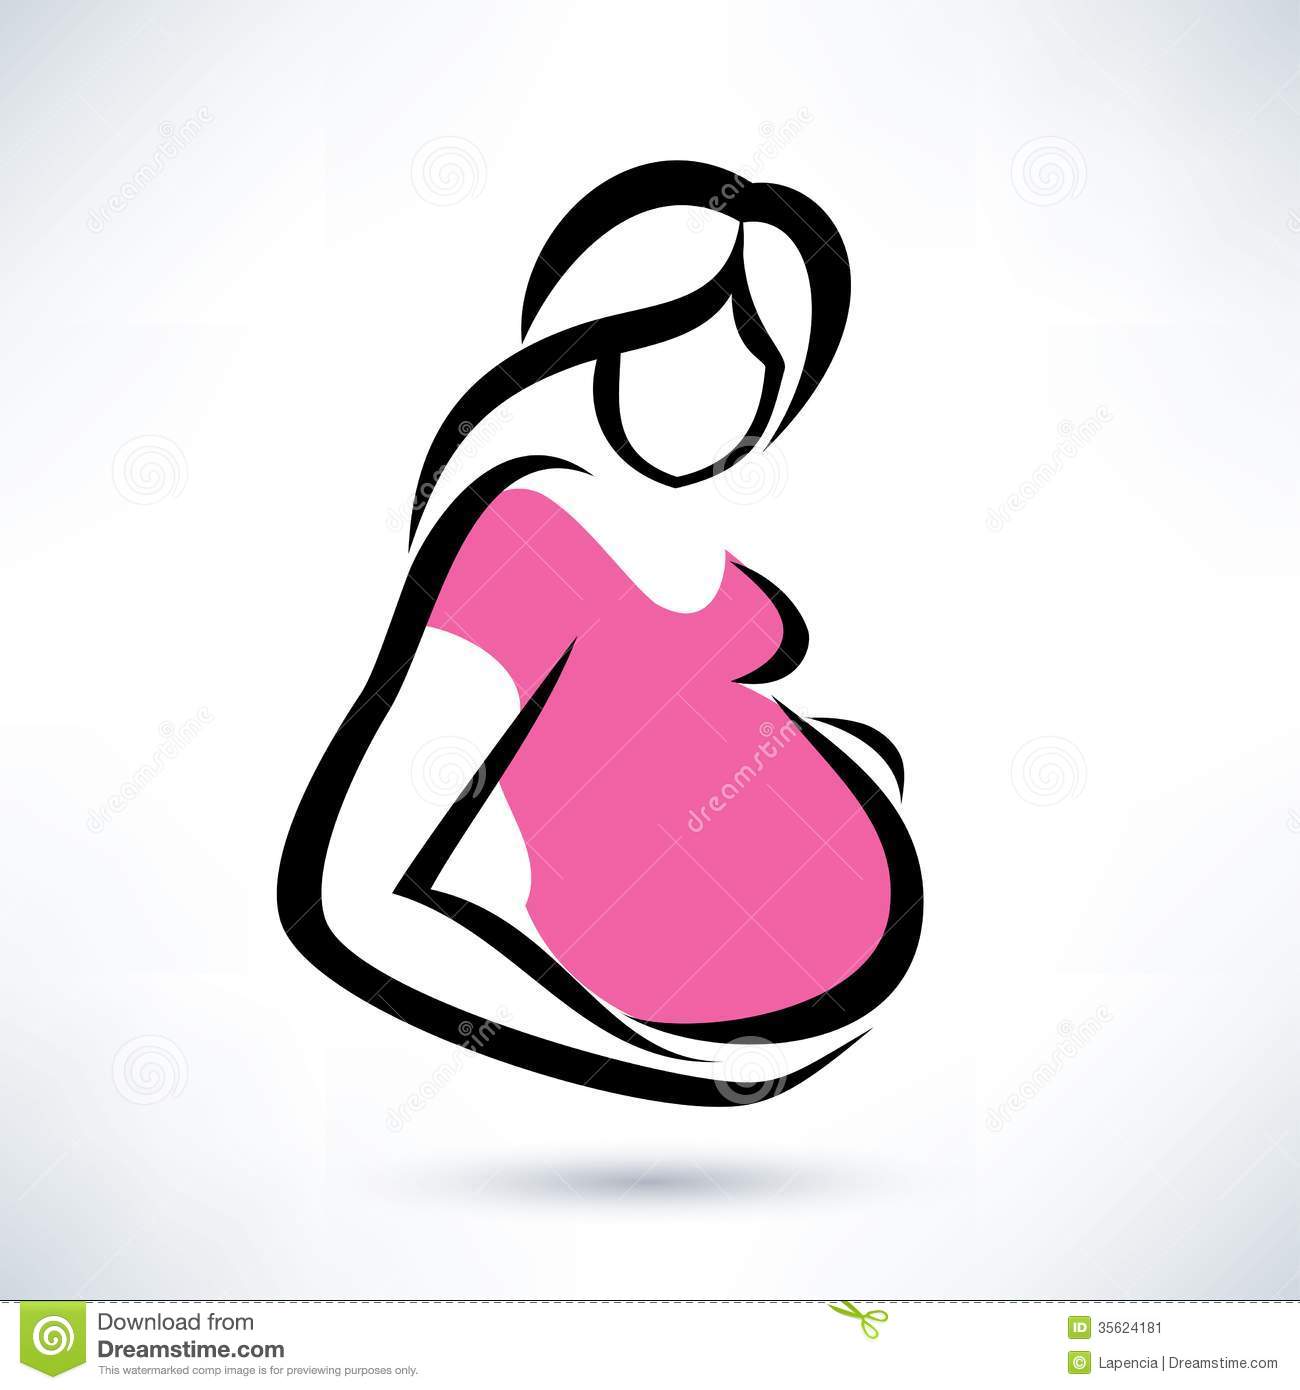 Pregnant Woman Stylized Symbol Stock Image   Image  35624181